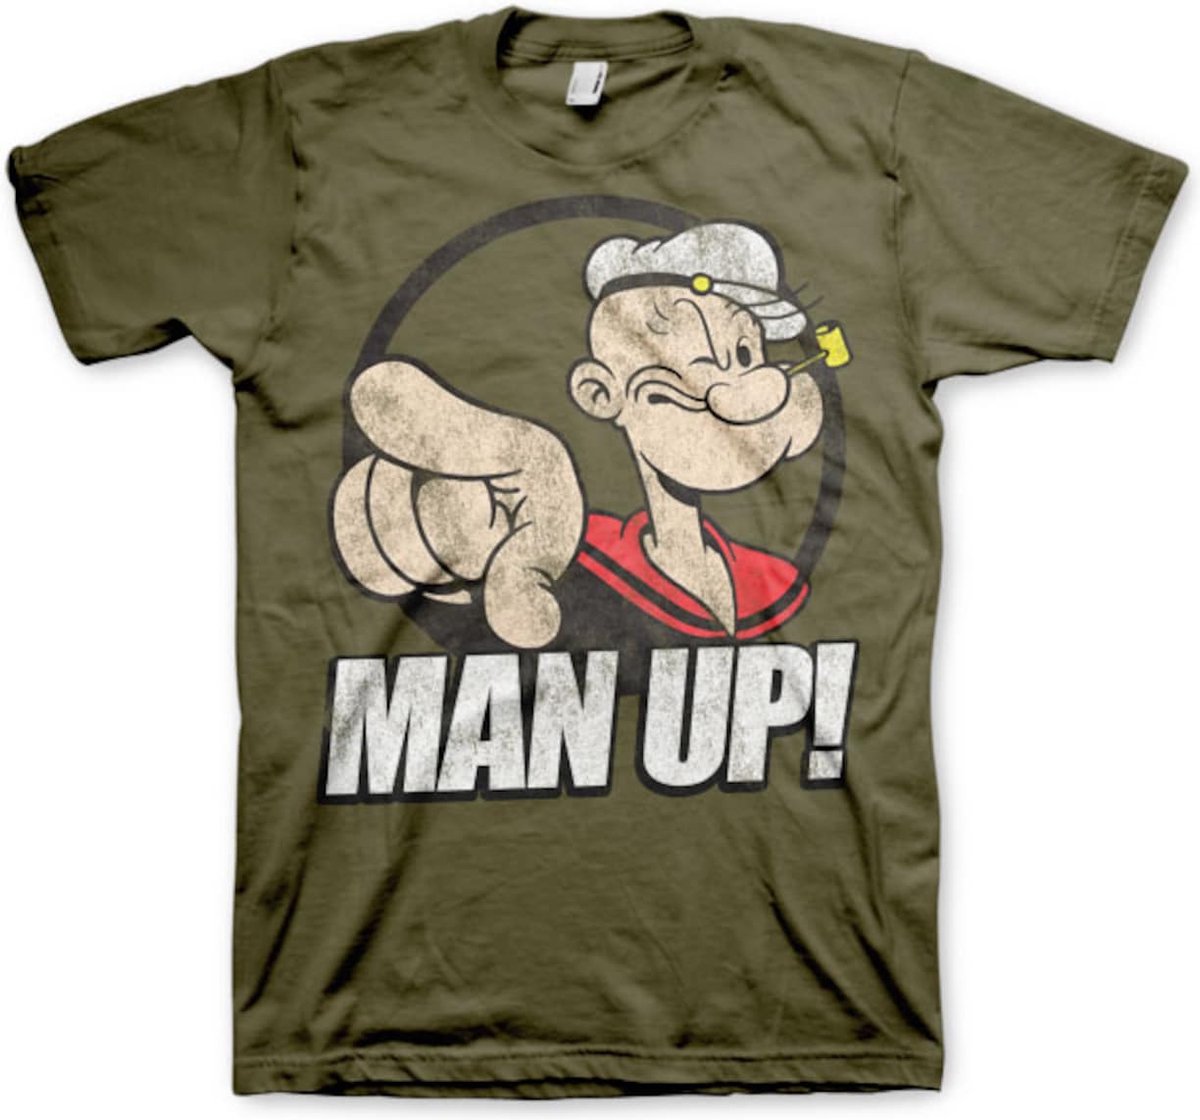 Popeye Shirt – Man Up! Maat 3XL